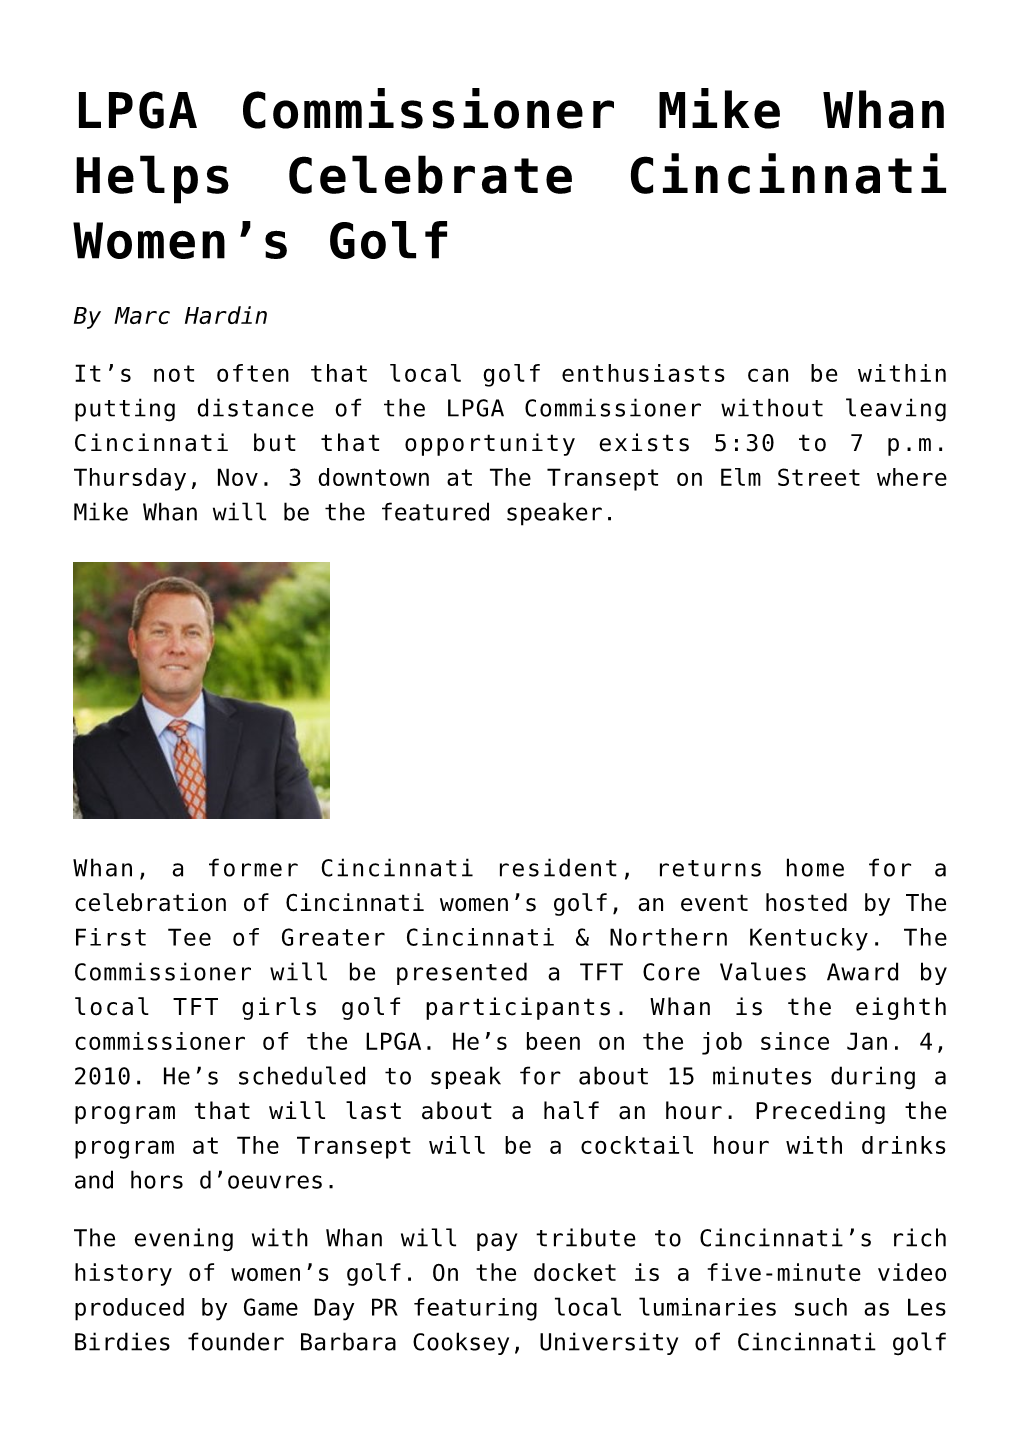 LPGA Commissioner Mike Whan Helps Celebrate Cincinnati Women’S Golf